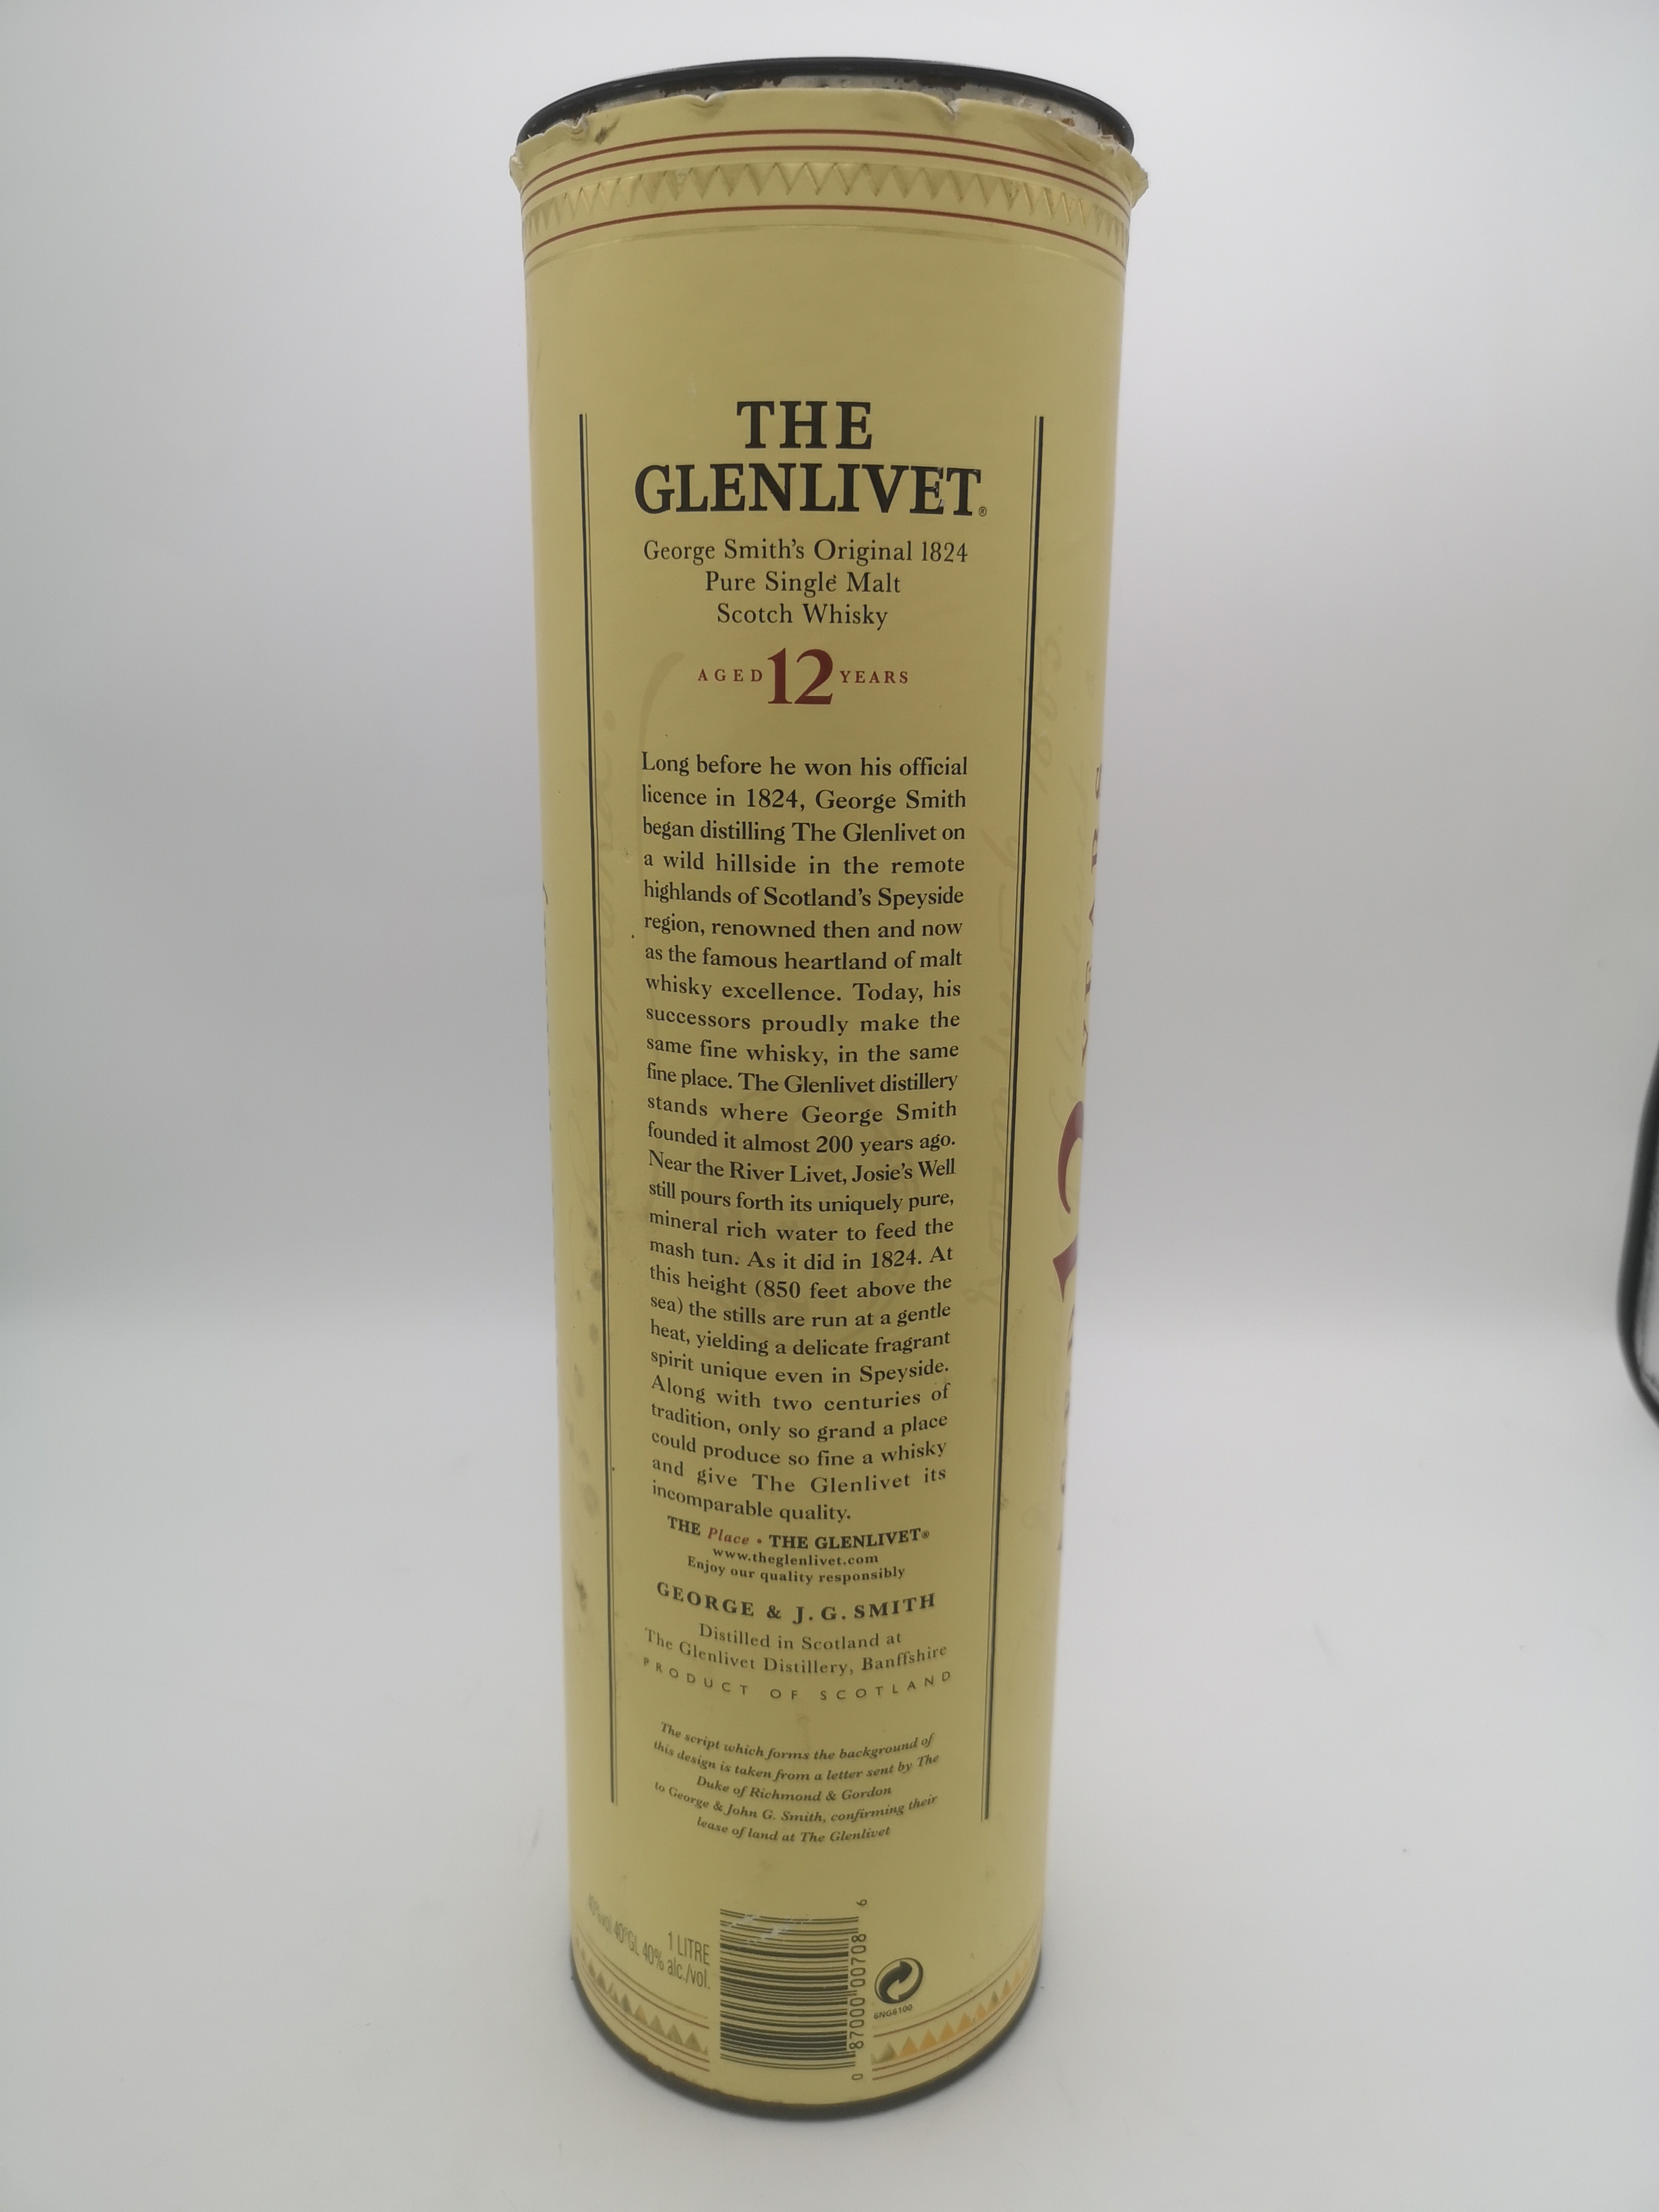 The Glenlivet, 1l pure single malt Scotch whisky - Image 7 of 7